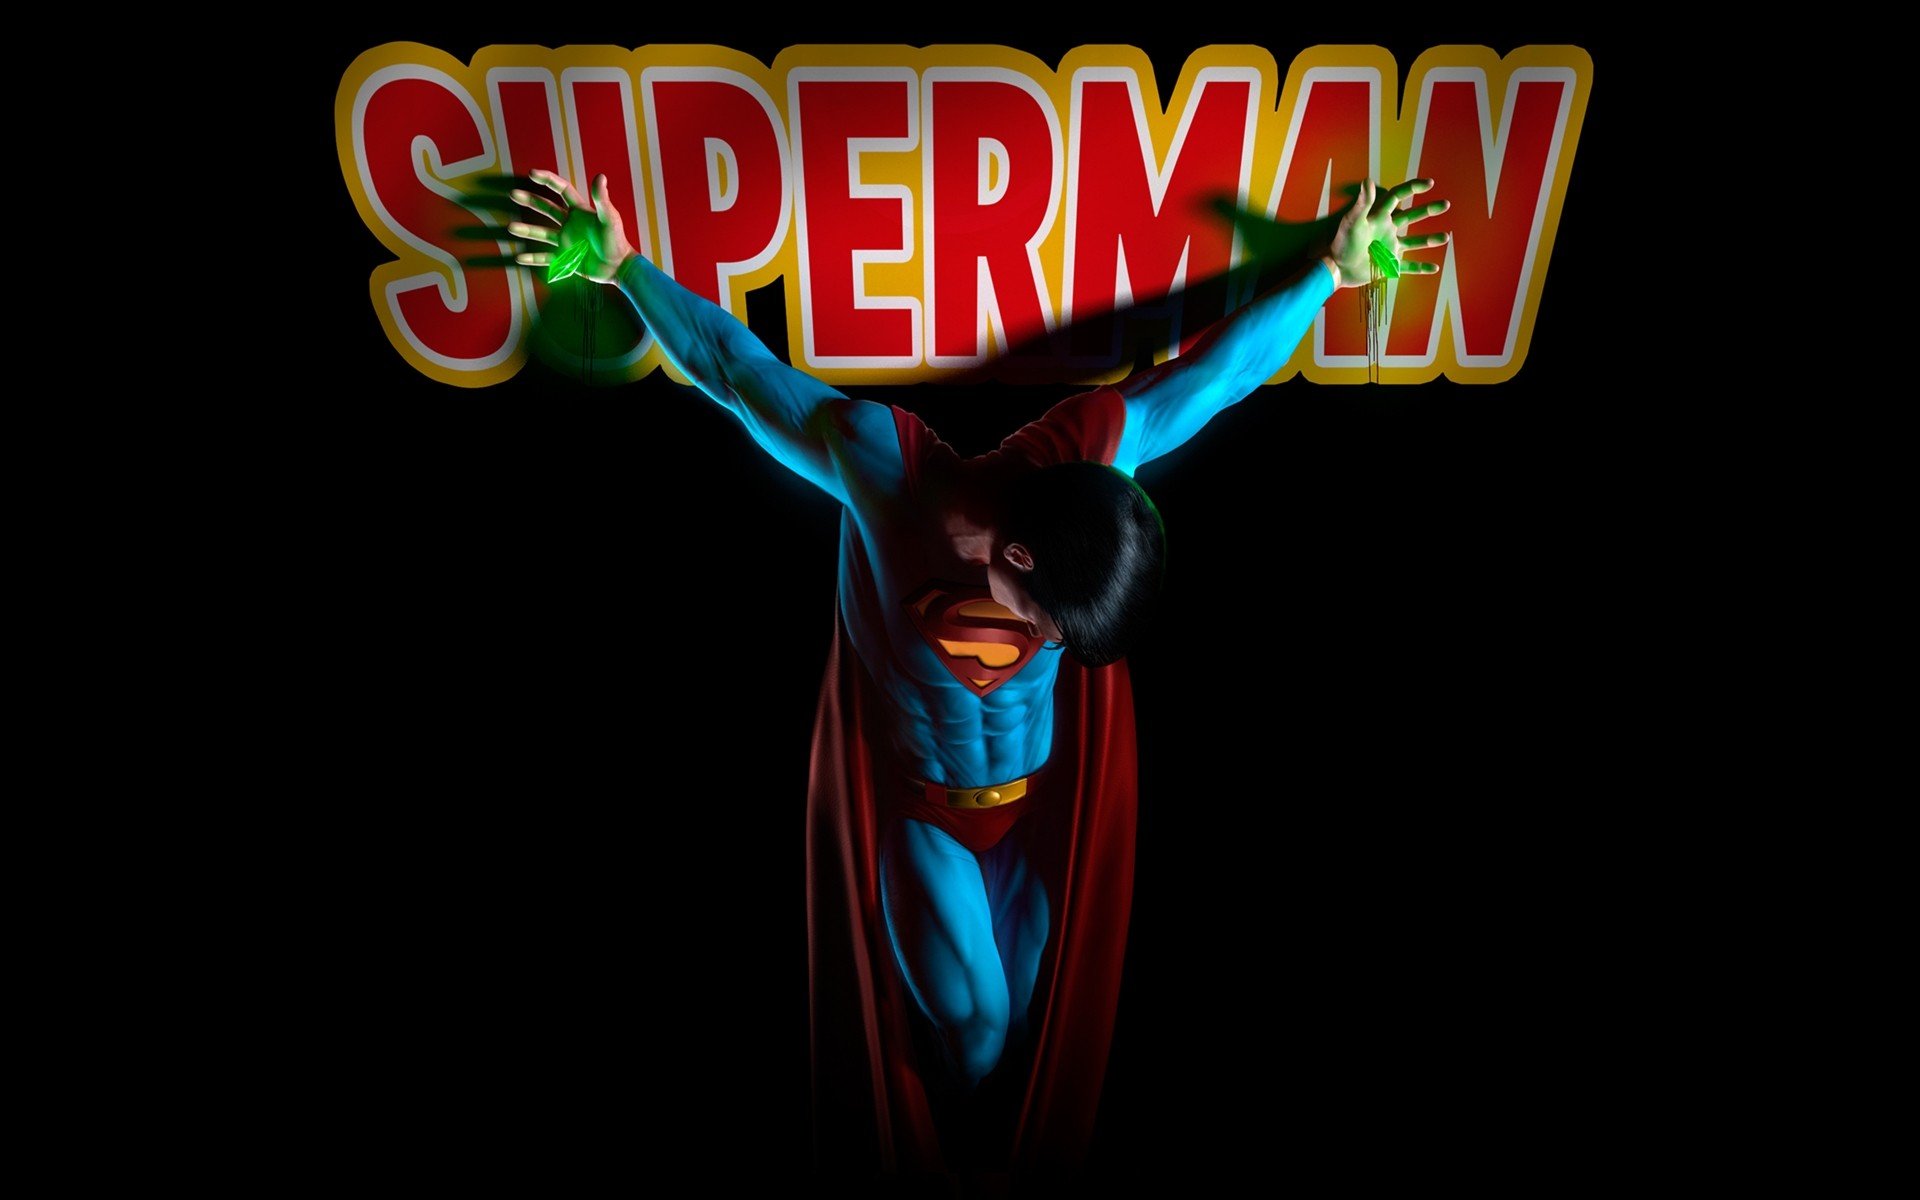  Superman superheroes black background crucified wallpaper background